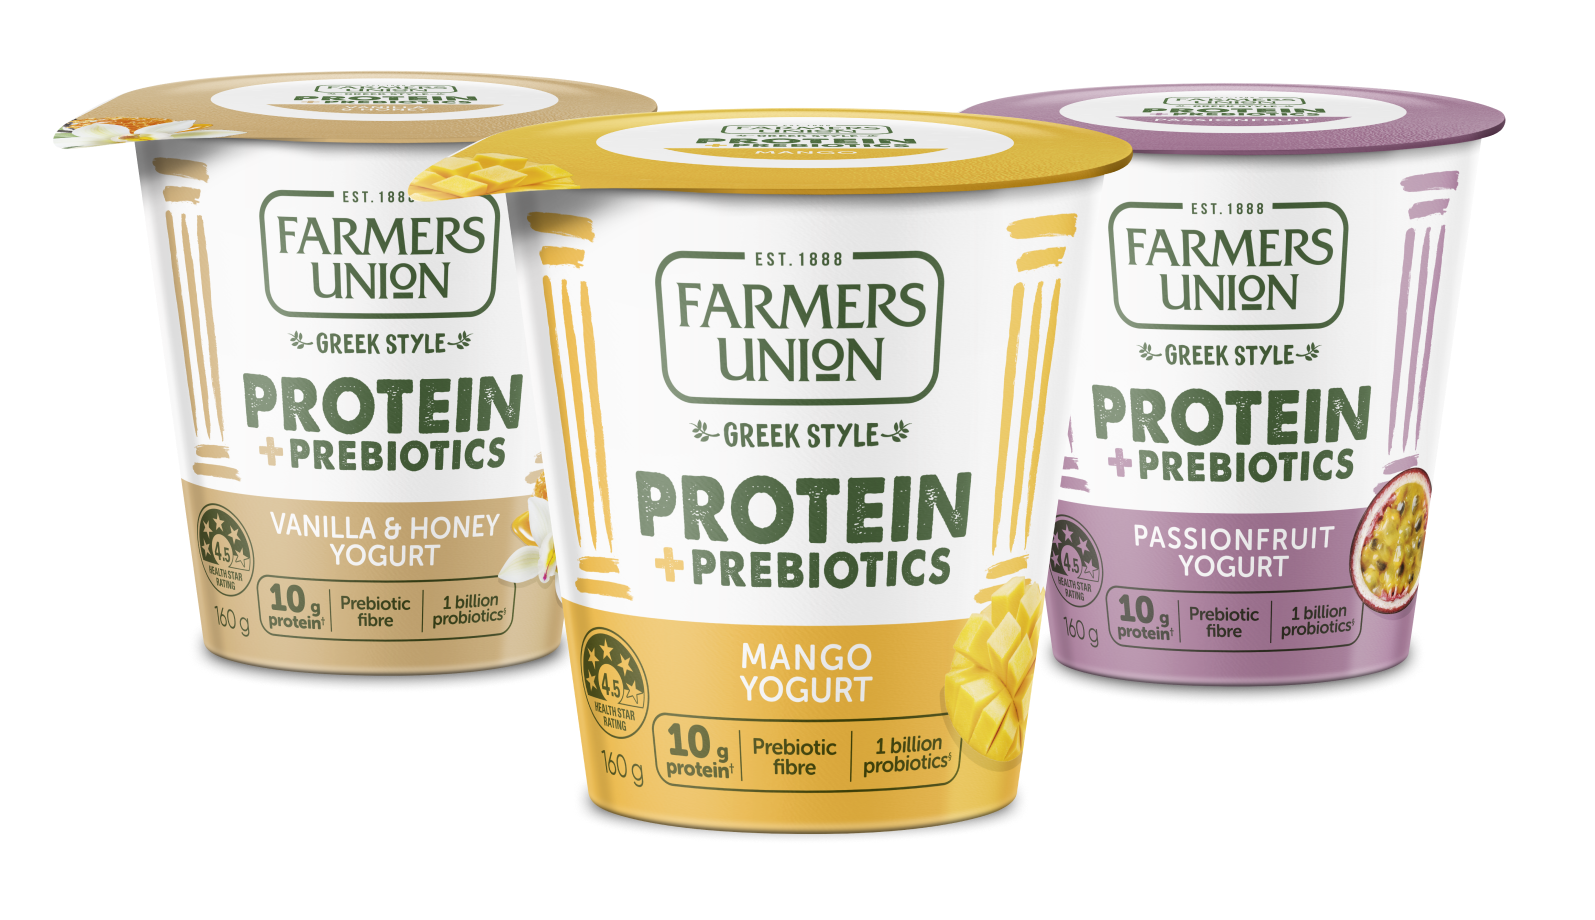 Farmers Union Protein + Prebiotics range of products